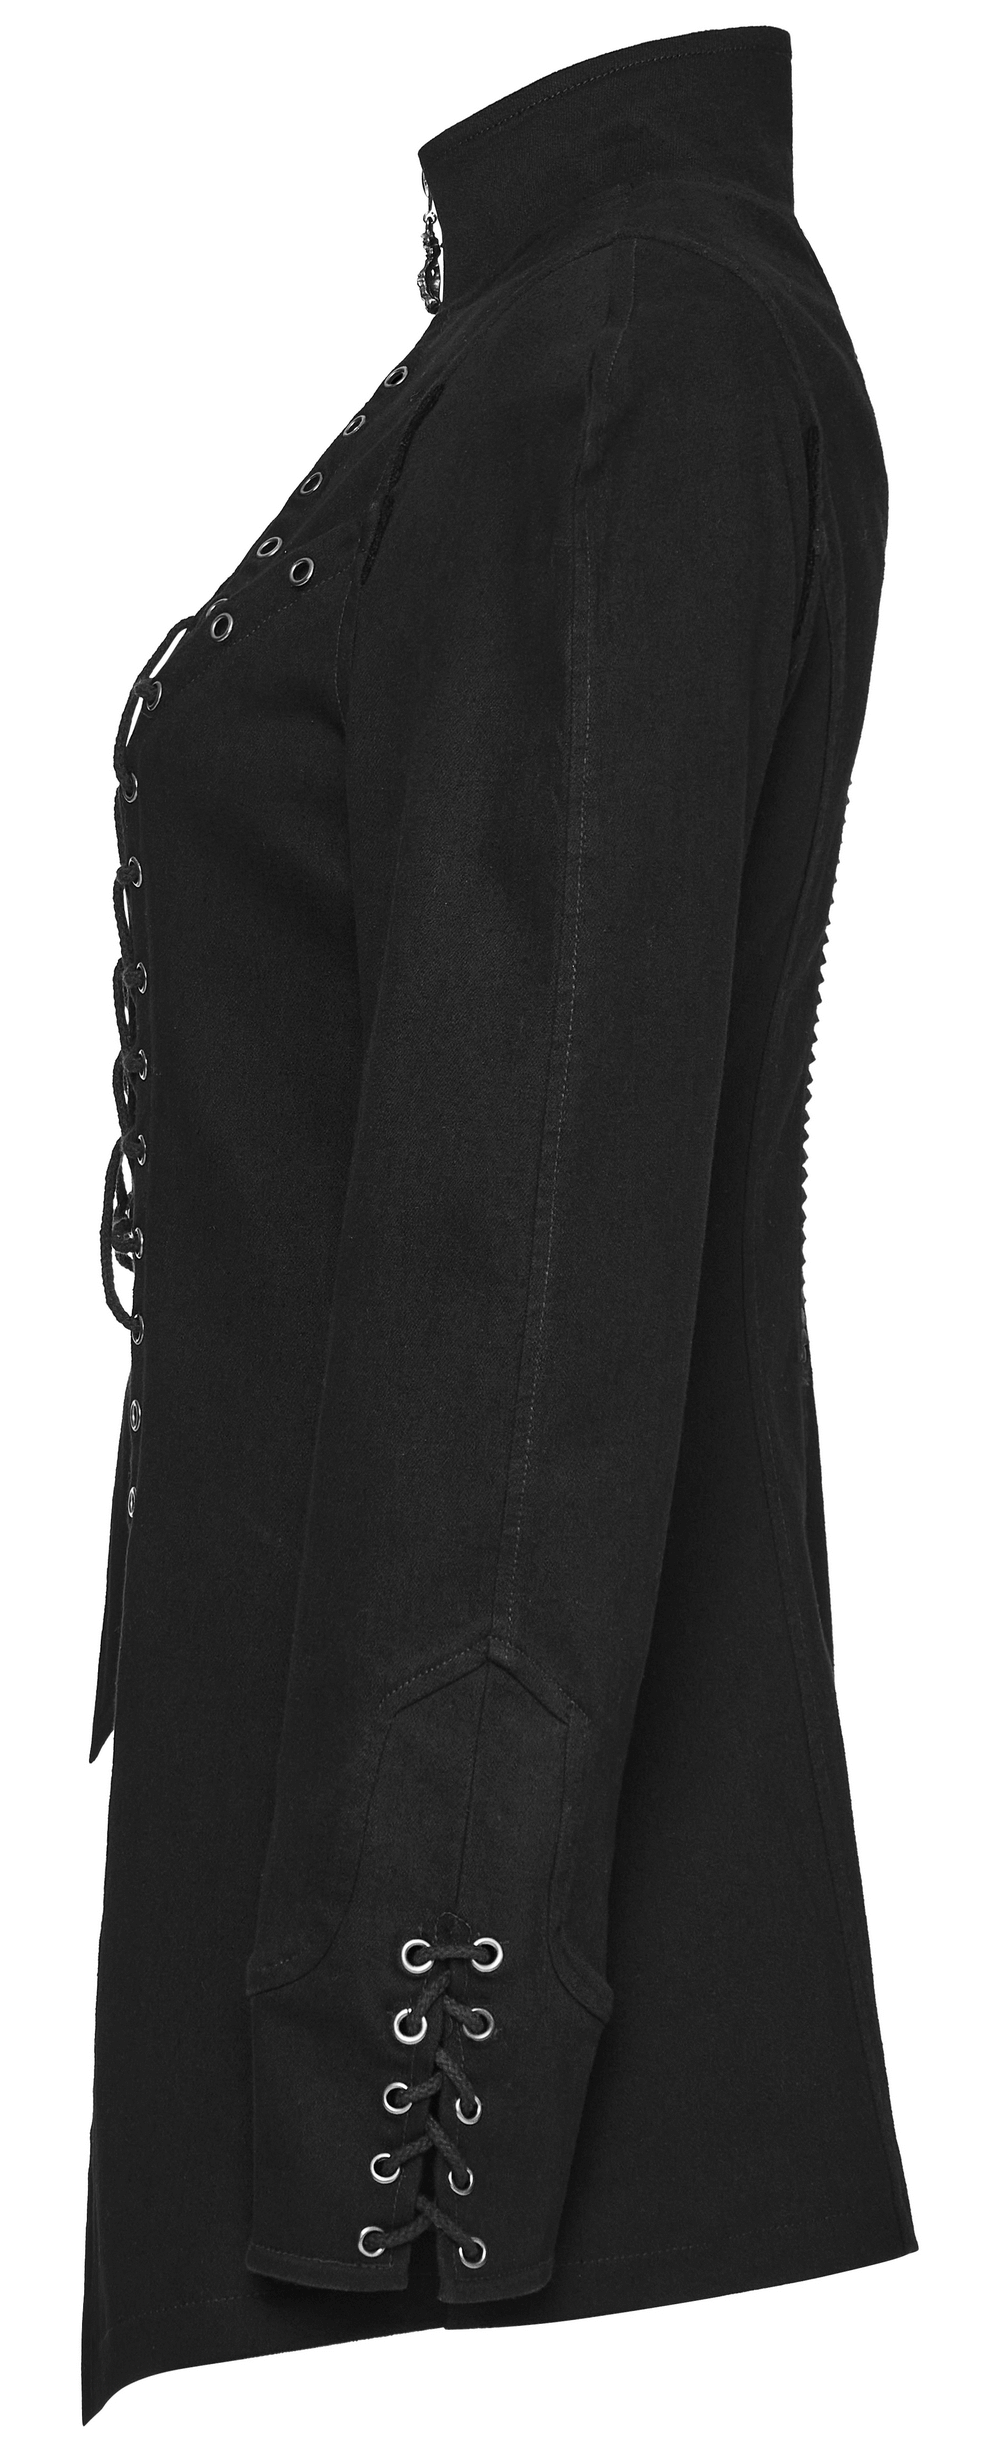 Victorian Lace-Up Gothic Jacket, Slim Black Denim - HARD'N'HEAVY